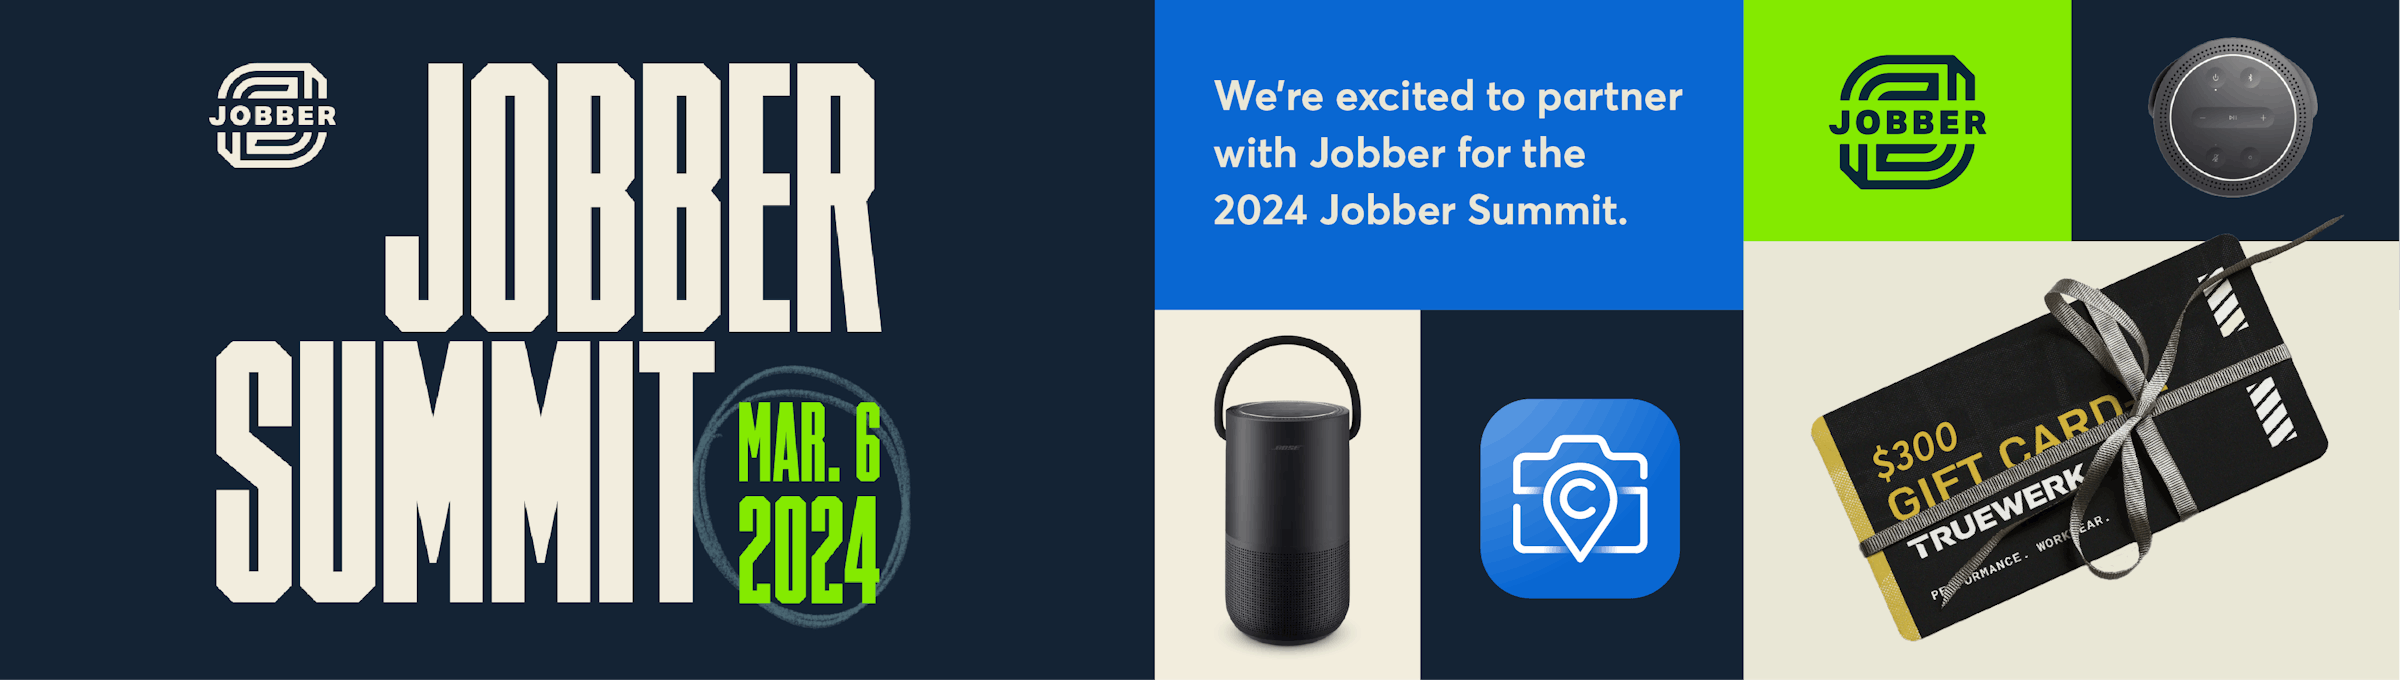 Jobber Summit Giveaway